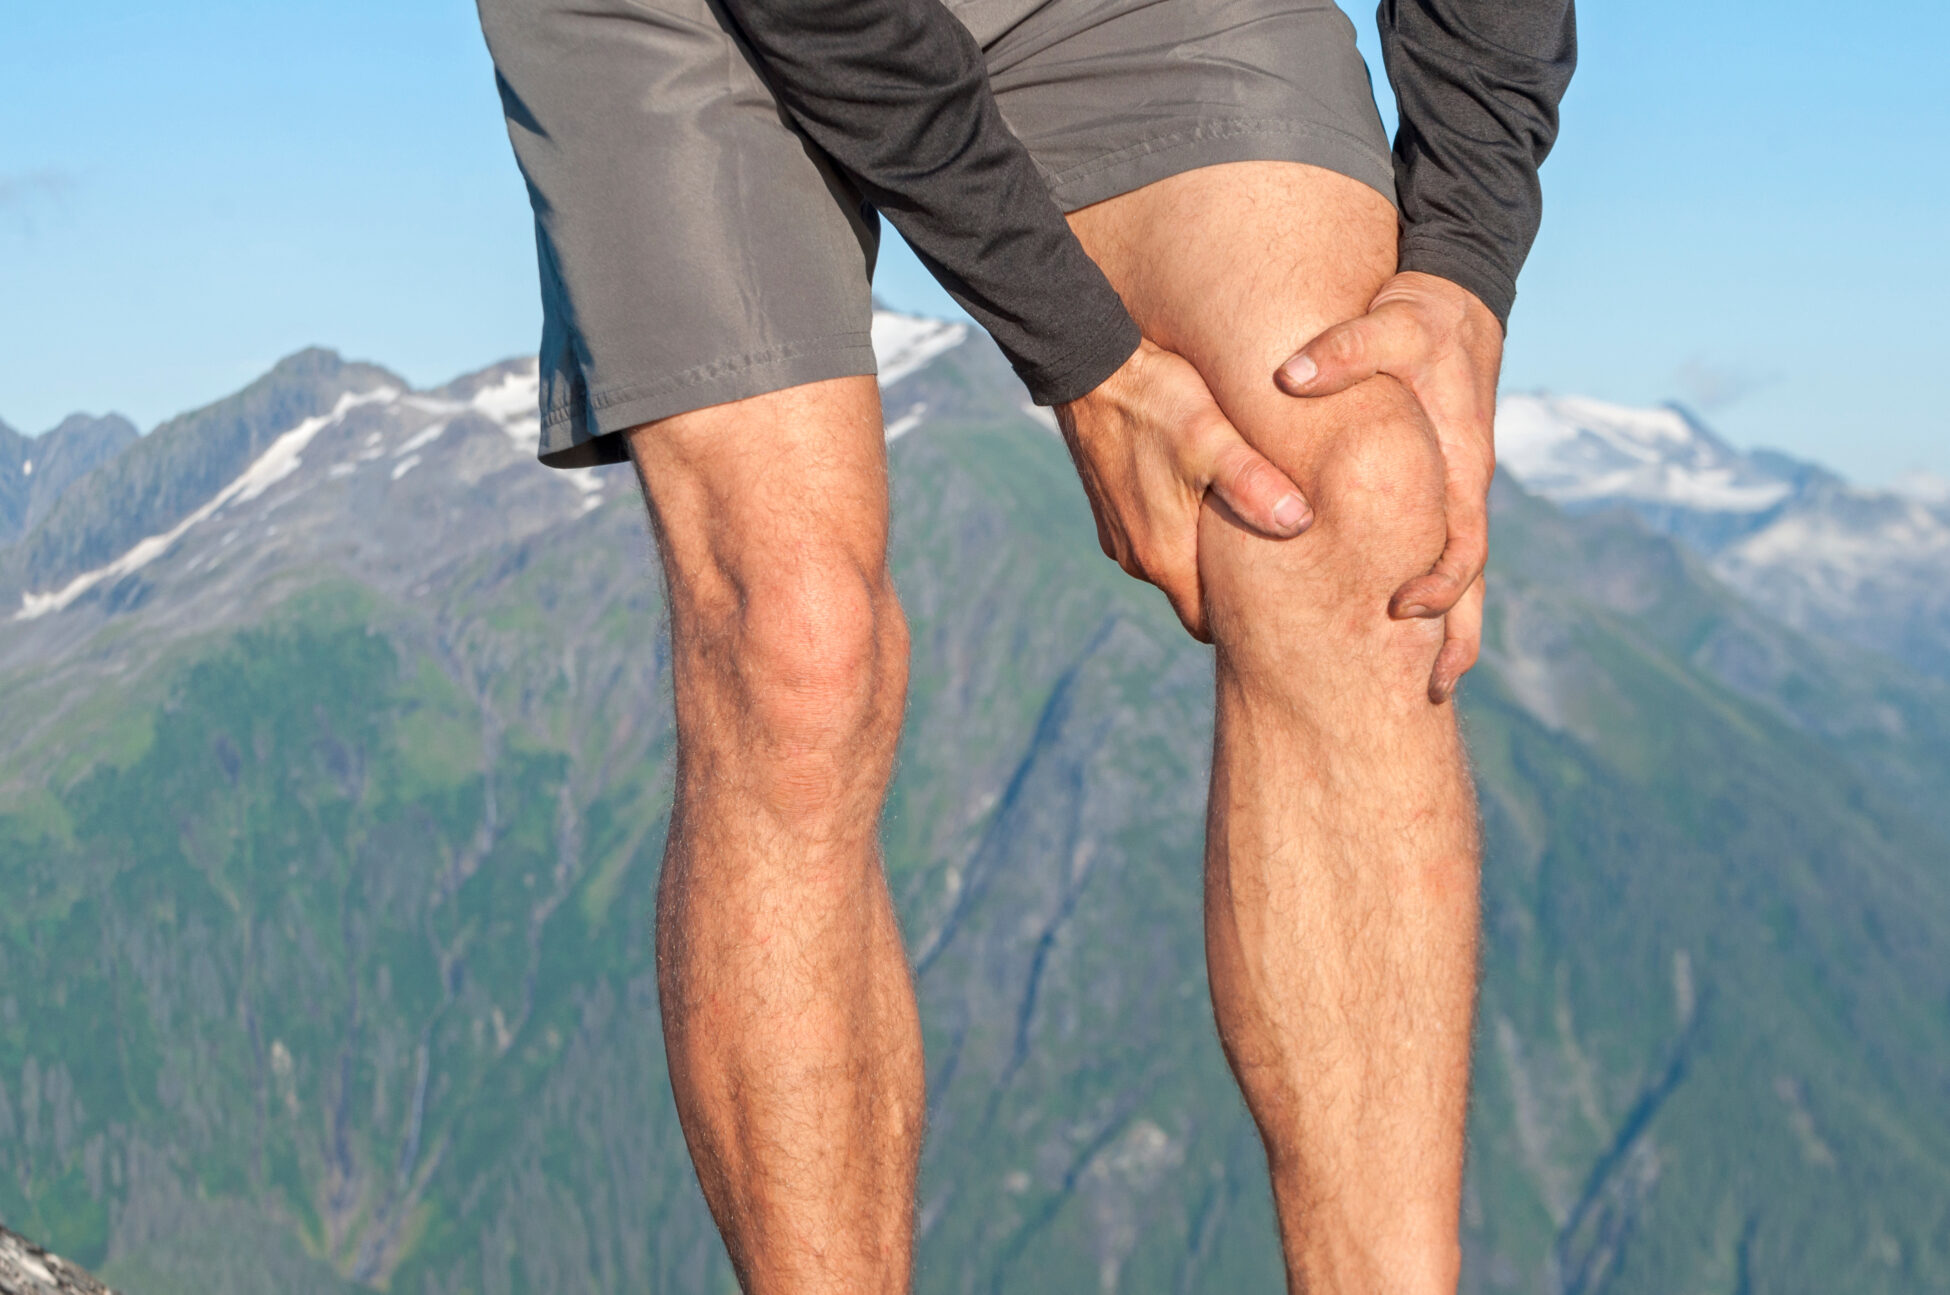 Man suffering from fibromyalgia in left knee